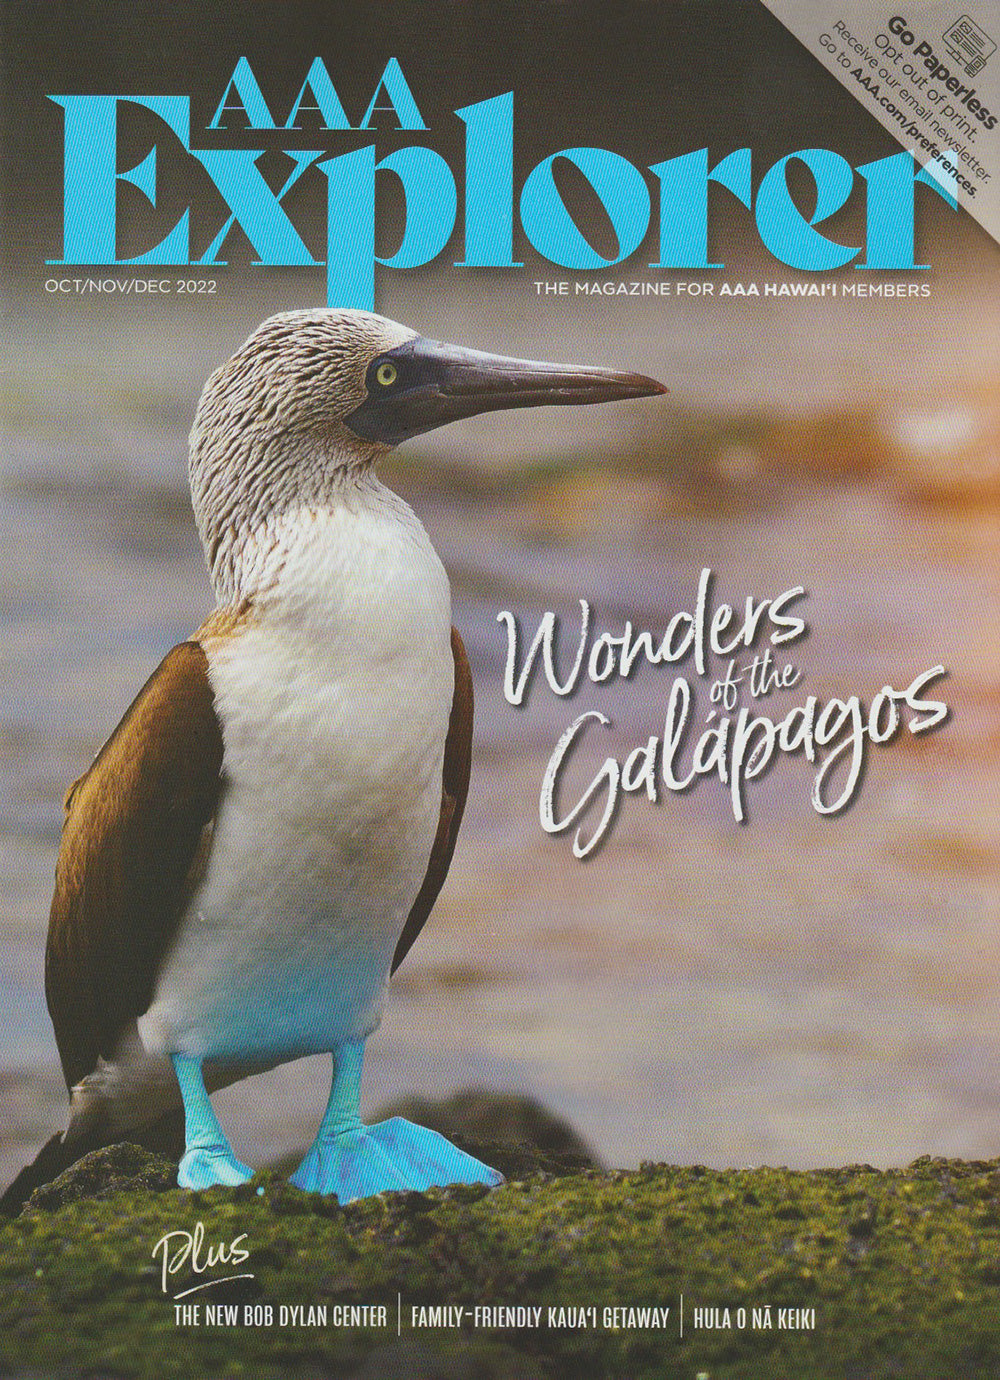 AAA Explorer - Cover